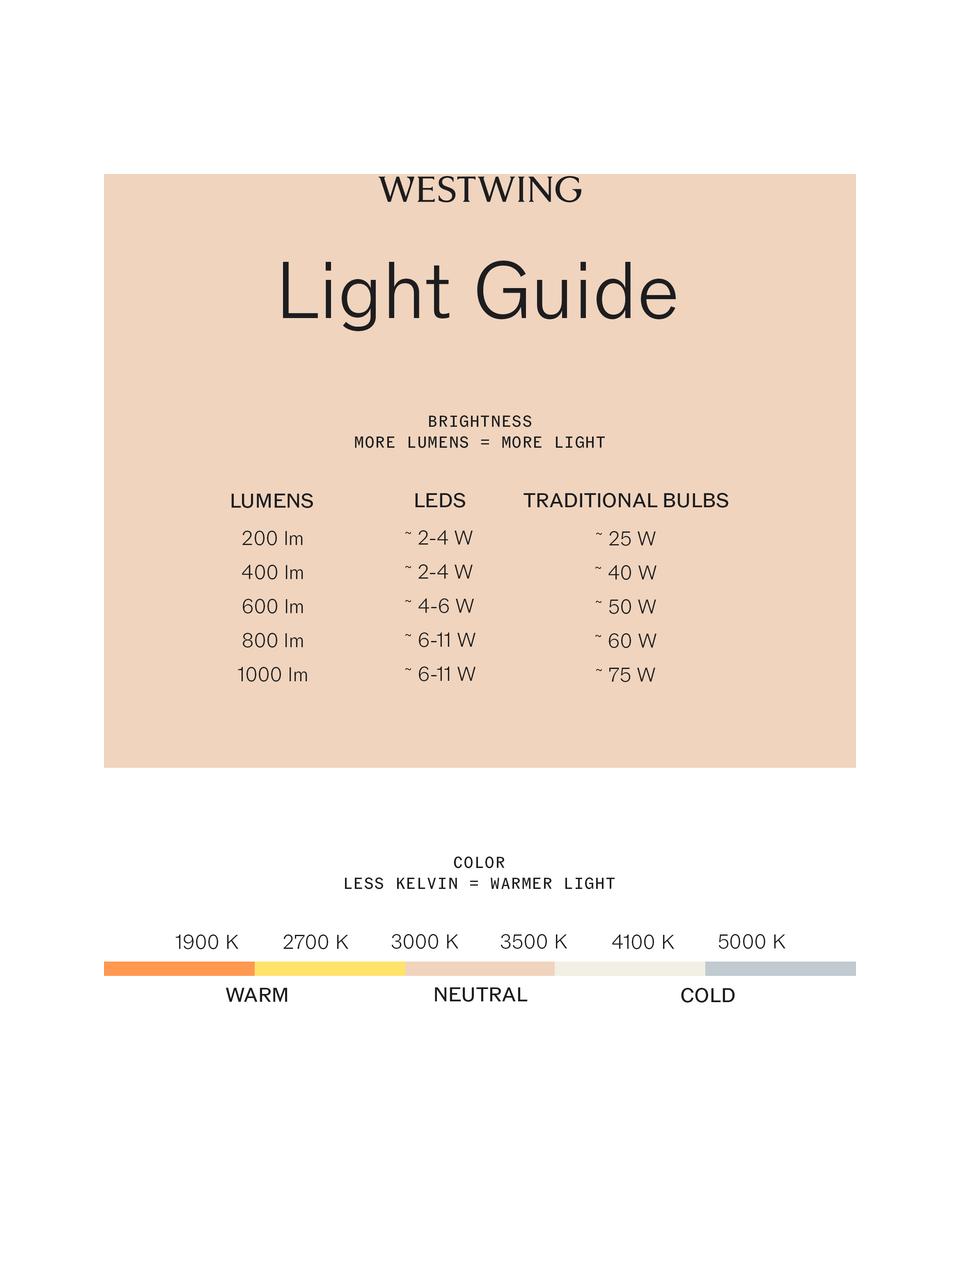 Dimbare LED wandlamp Hester, Lampenkap: glas, Wit, B 20 x H 26 cm